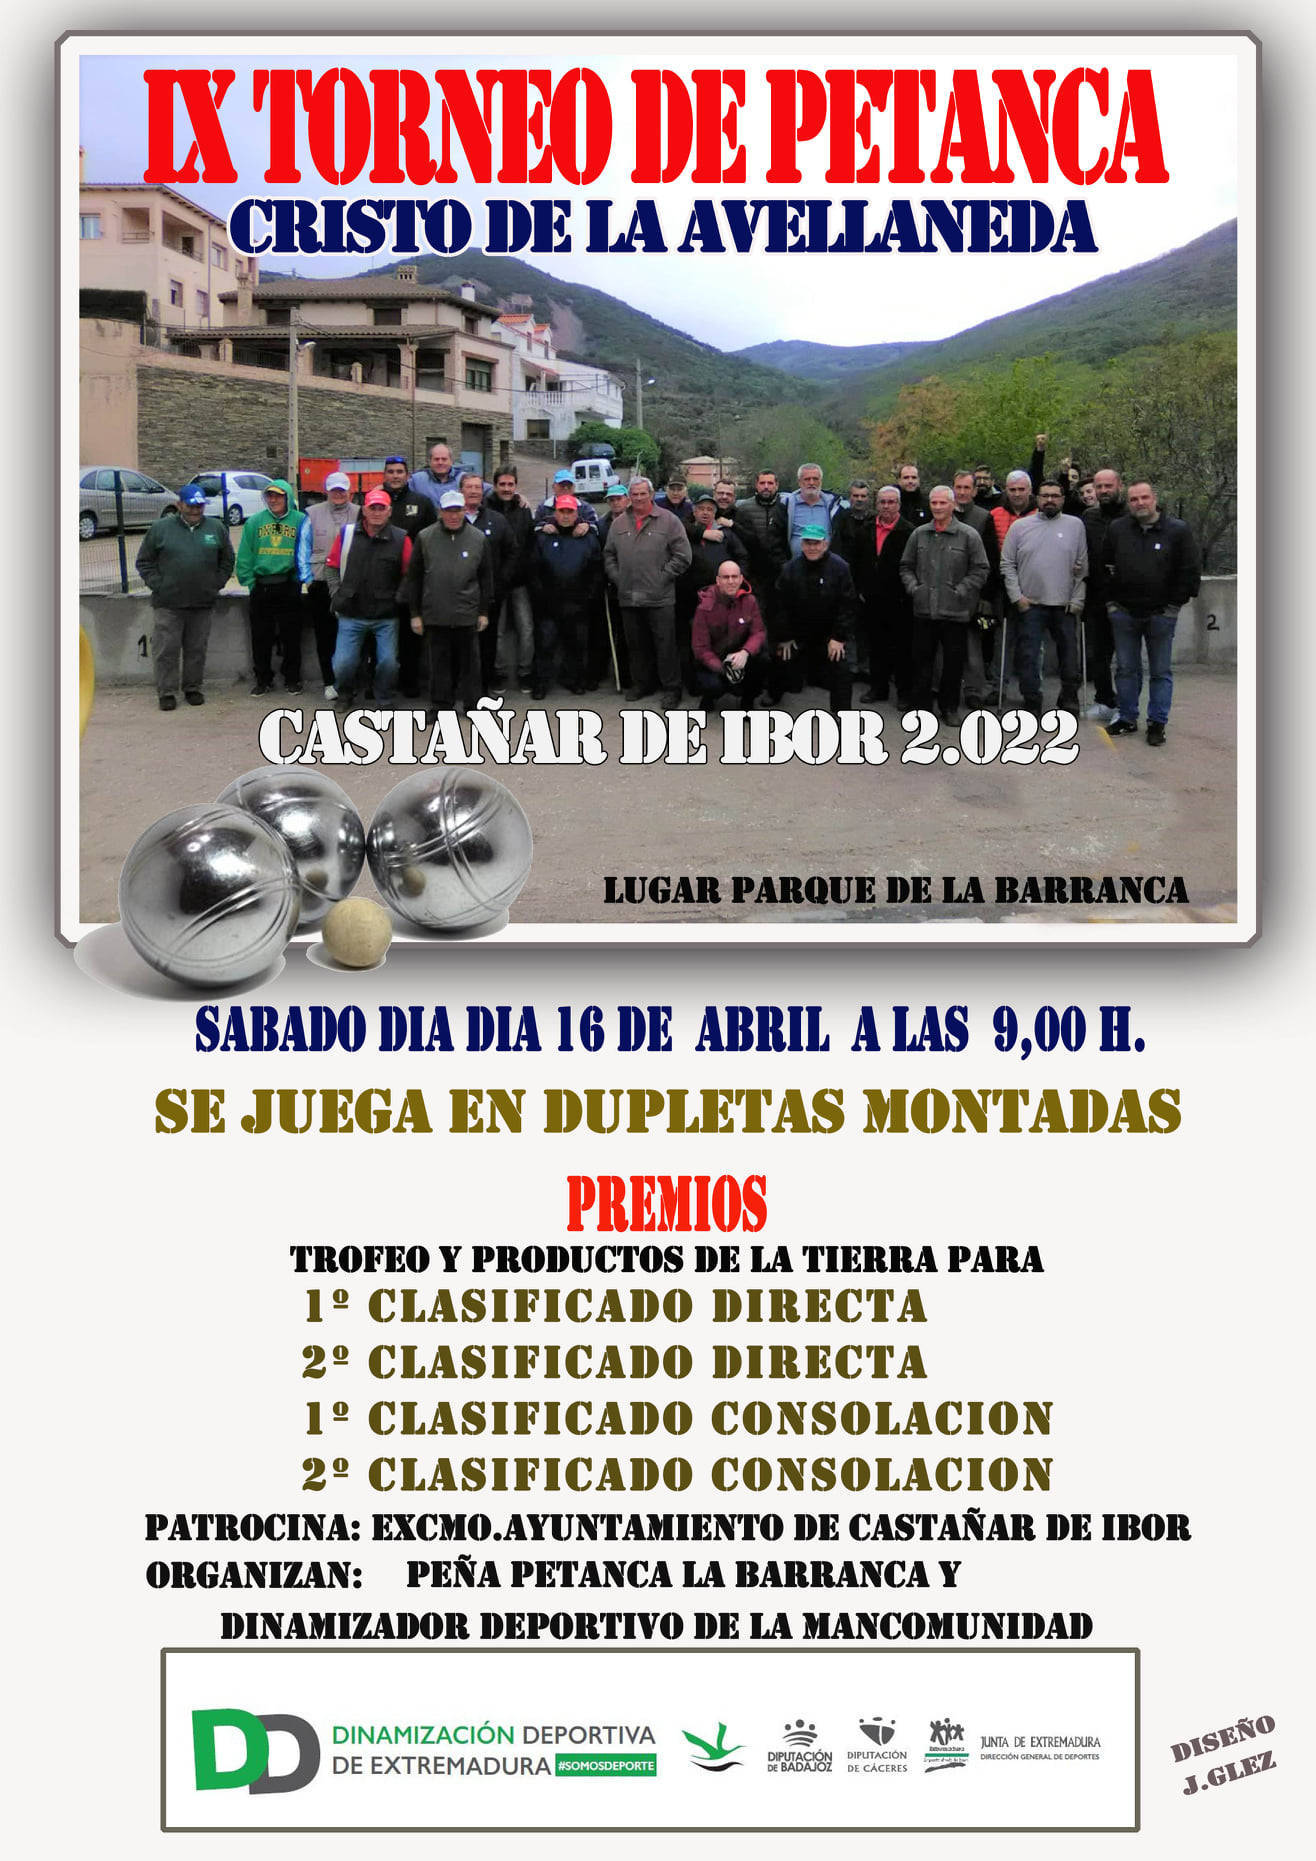 IX Torneo de Petanca 'Cristo de la Avellaneda' - Castañar de Ibor (Cáceres)